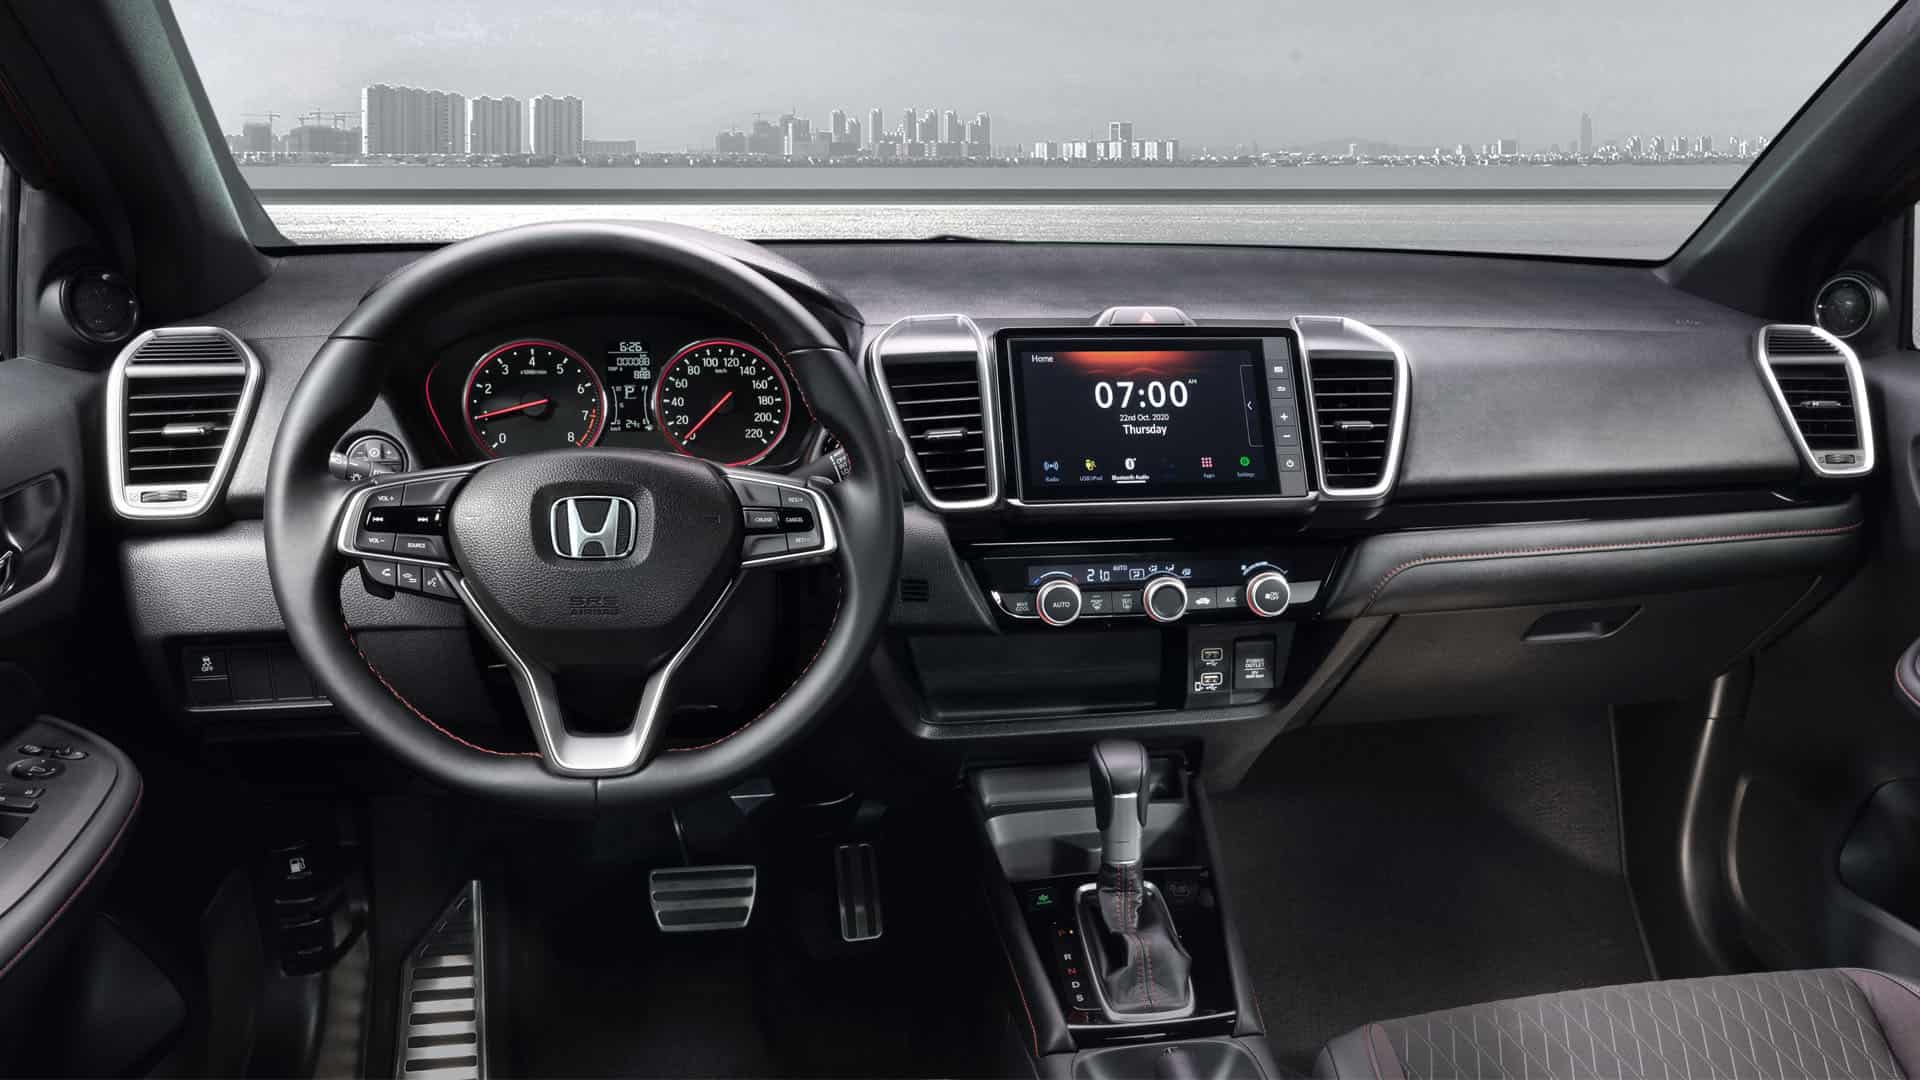 Honda City interior - Cockpit